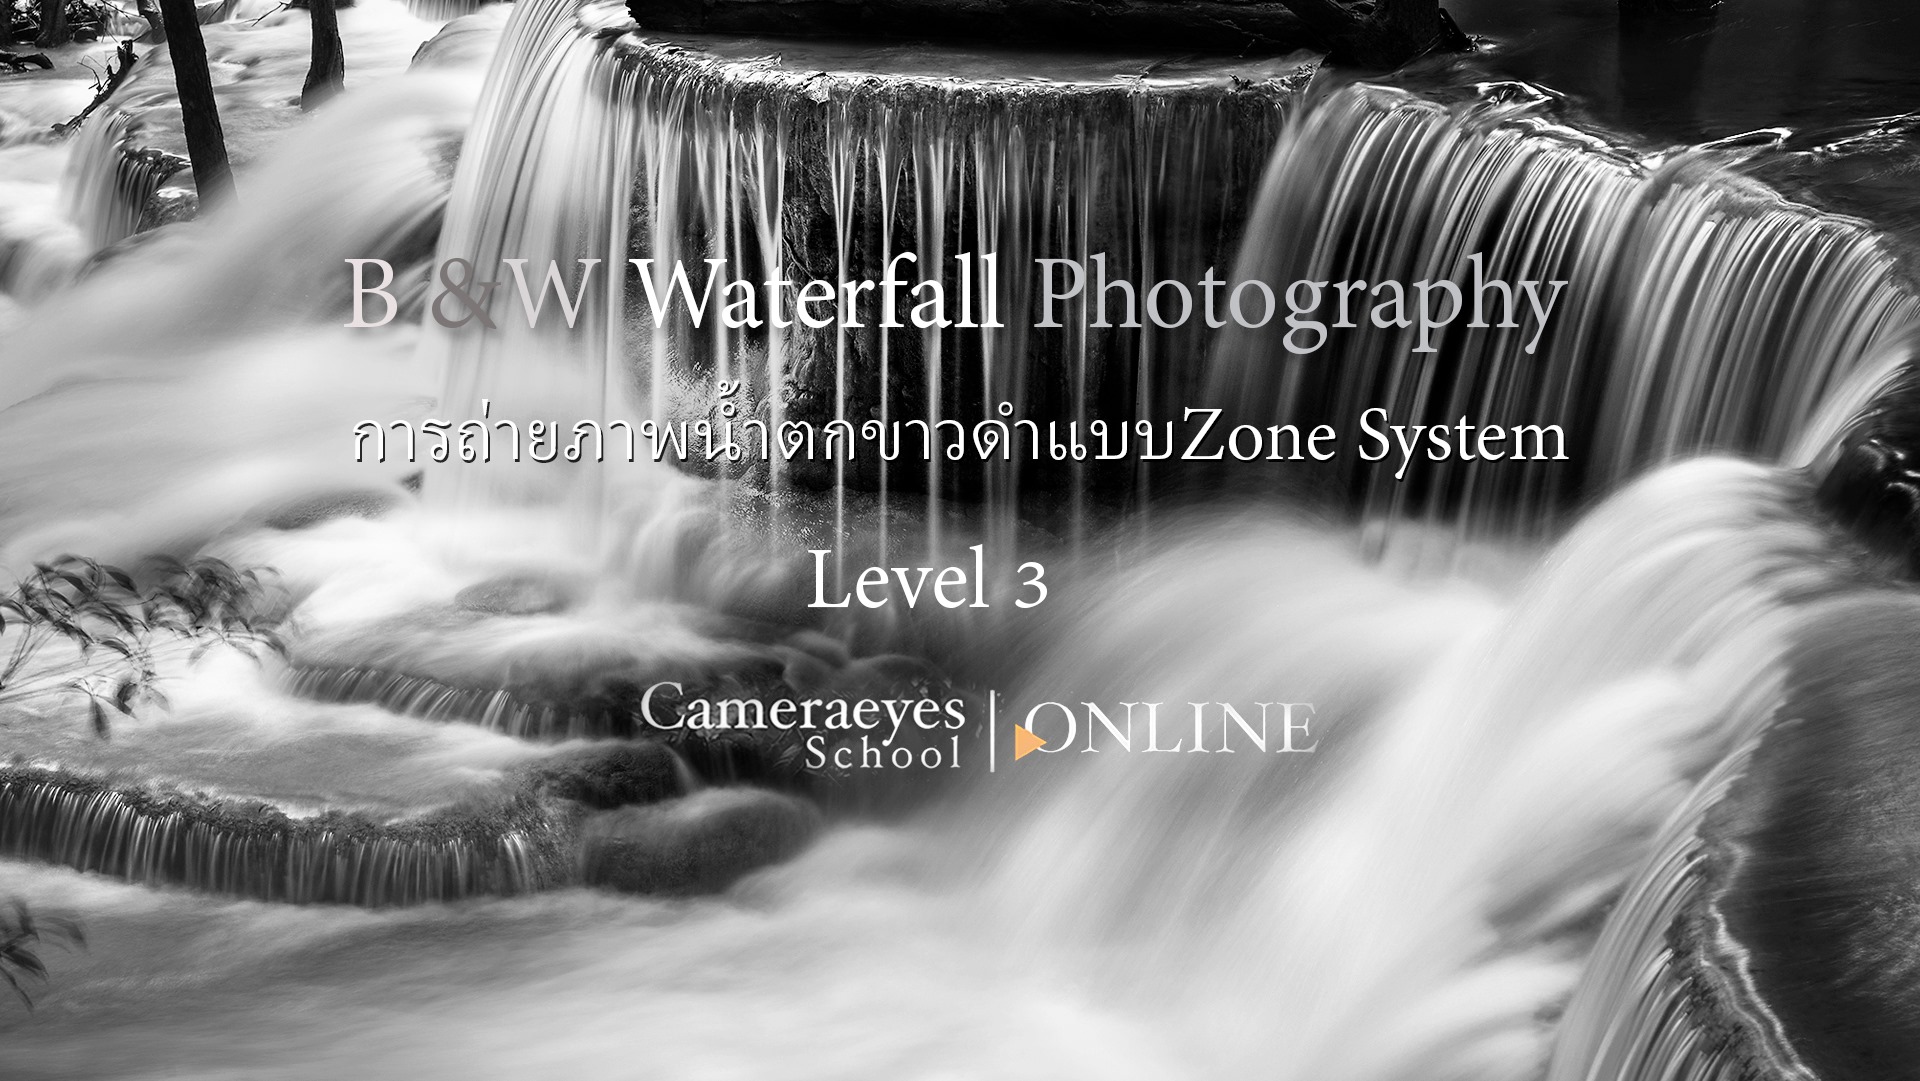 B&W Waterfall Photography